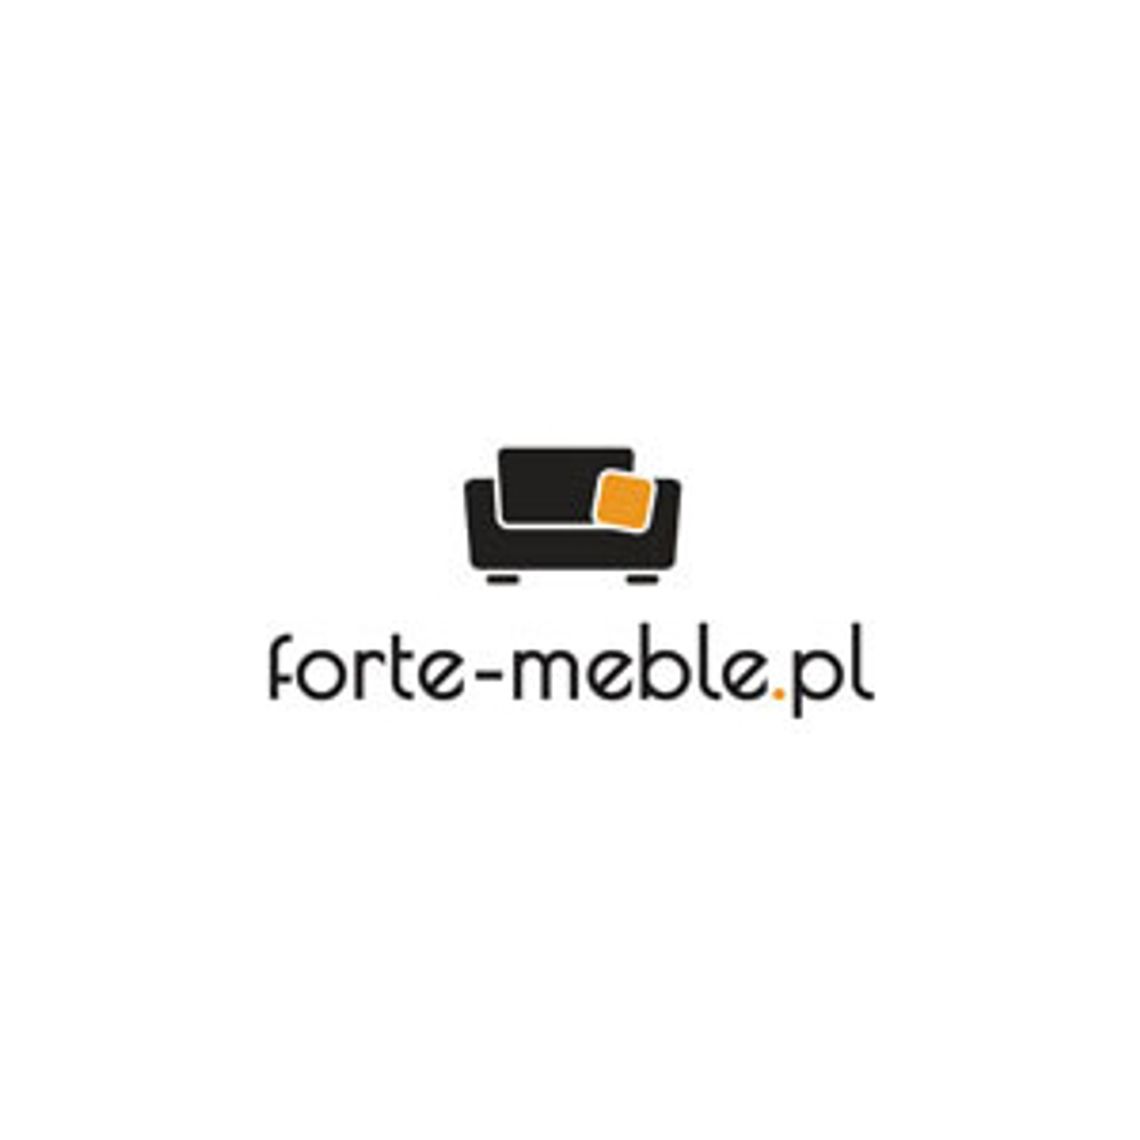 Internetowy sklep z meblami - Forte-Meble